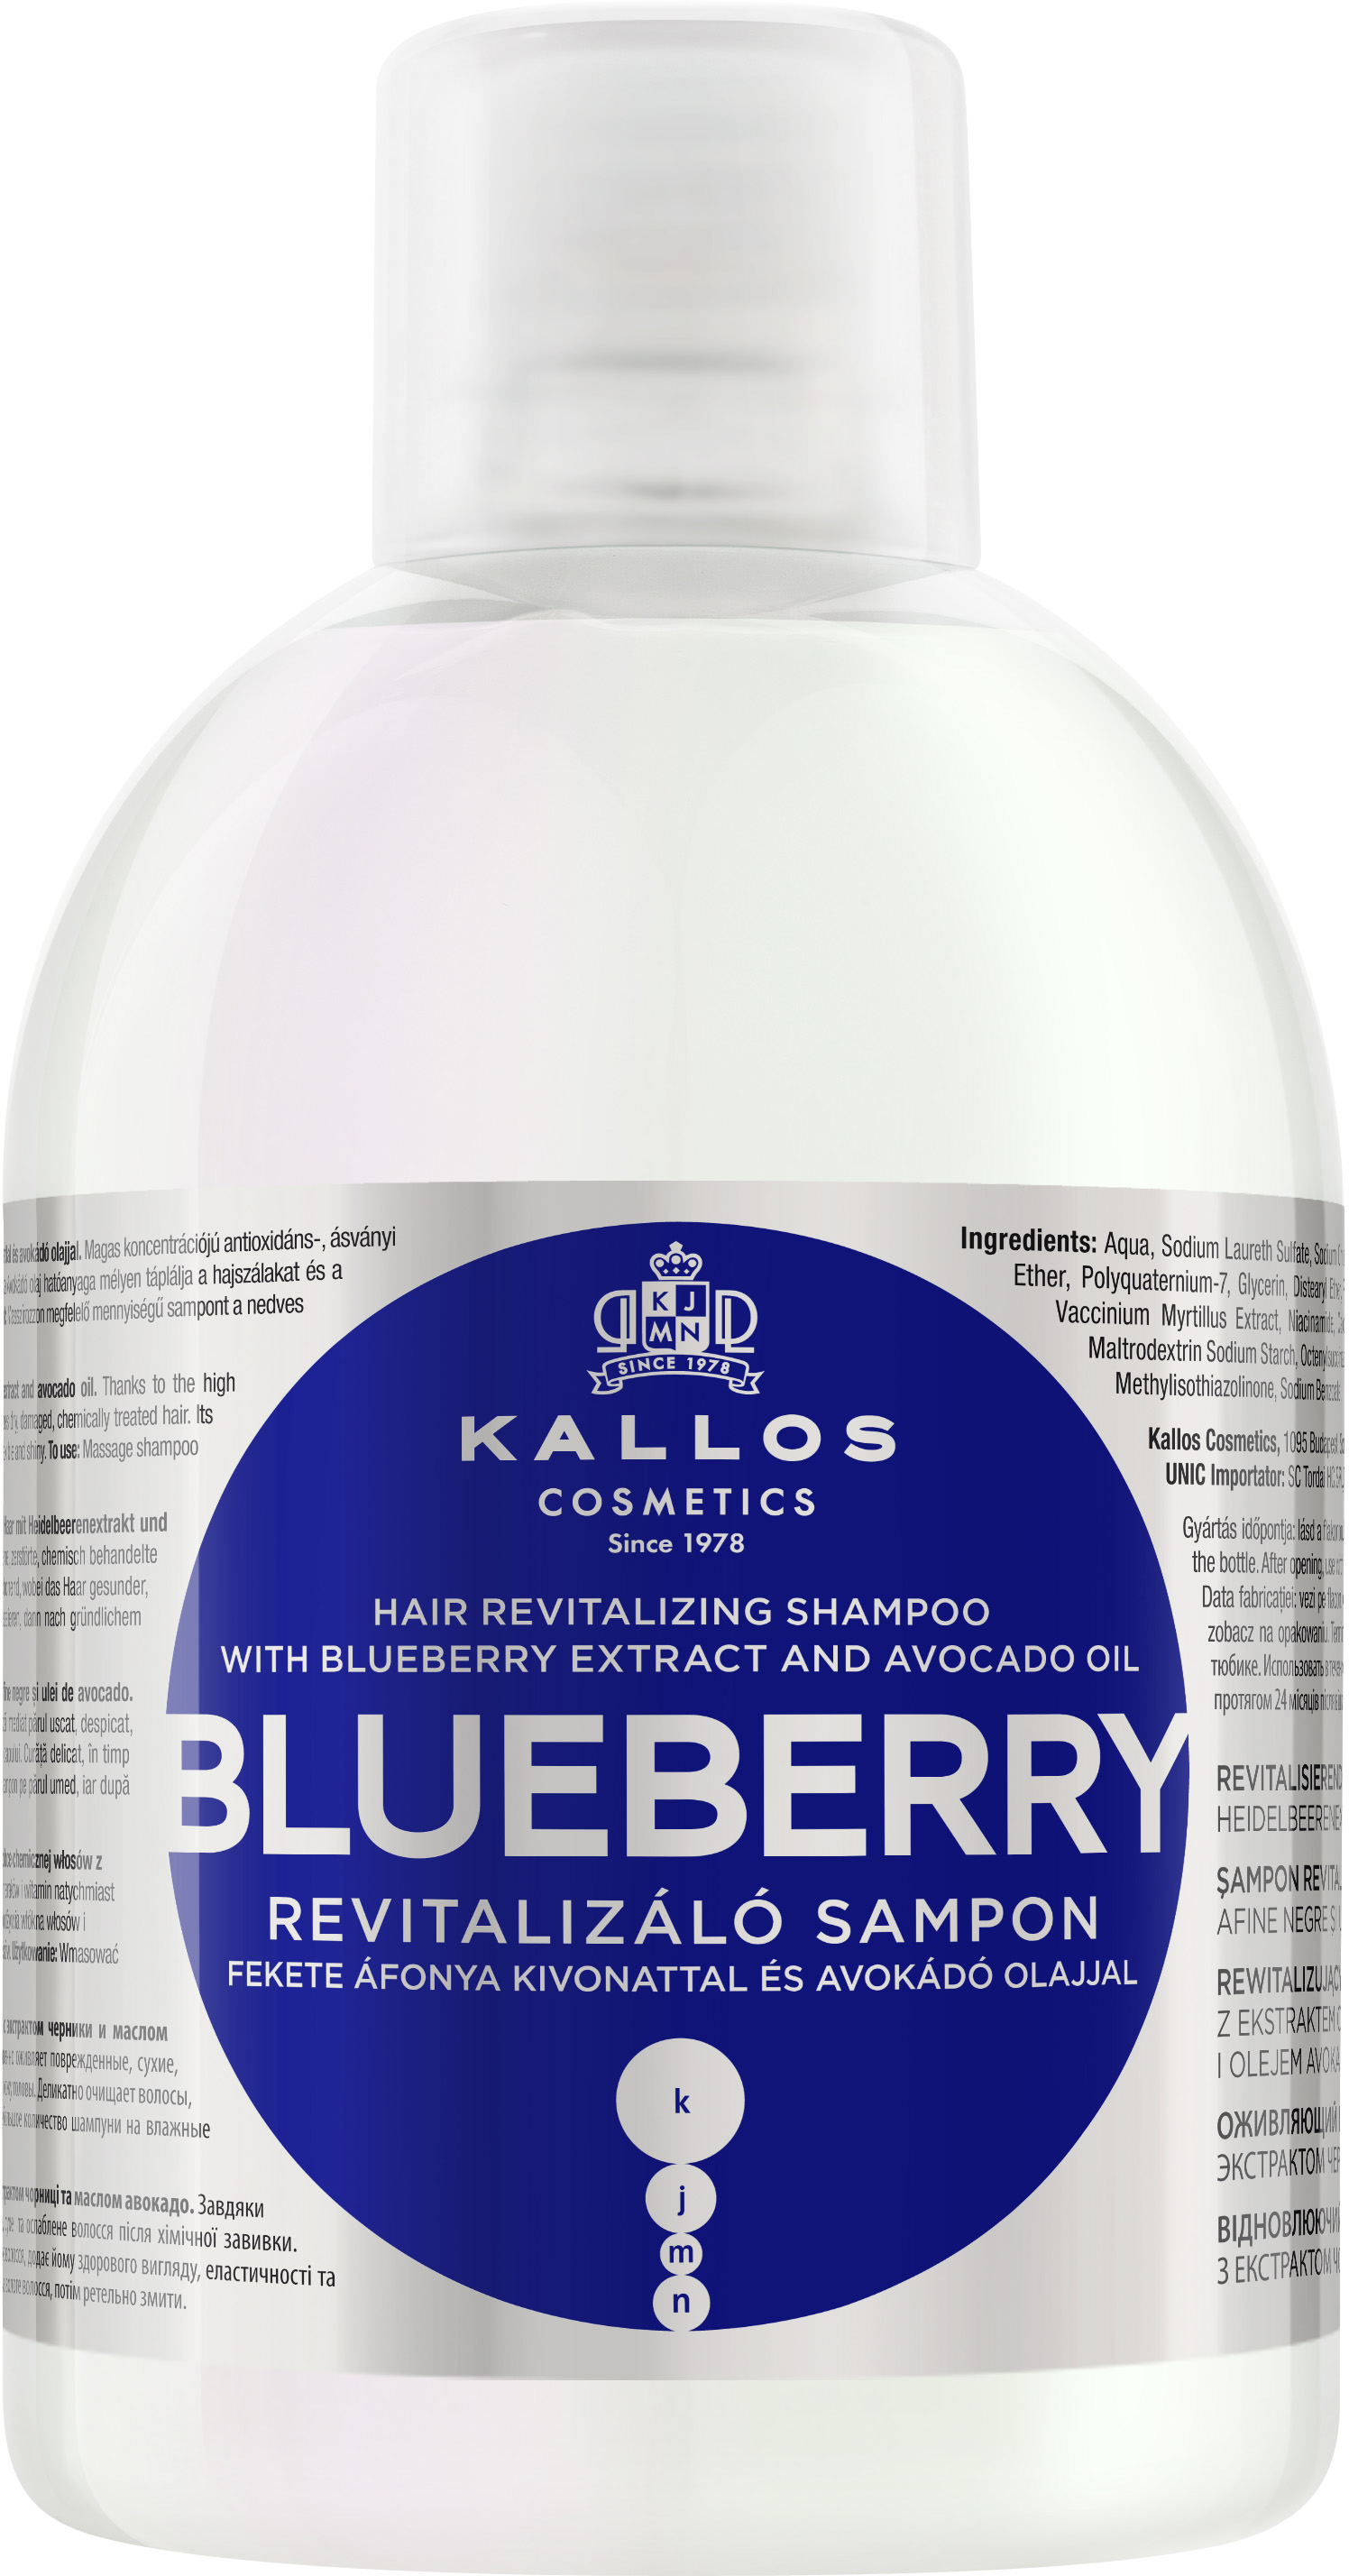 kallos cosmetics blueberry szampon włosów